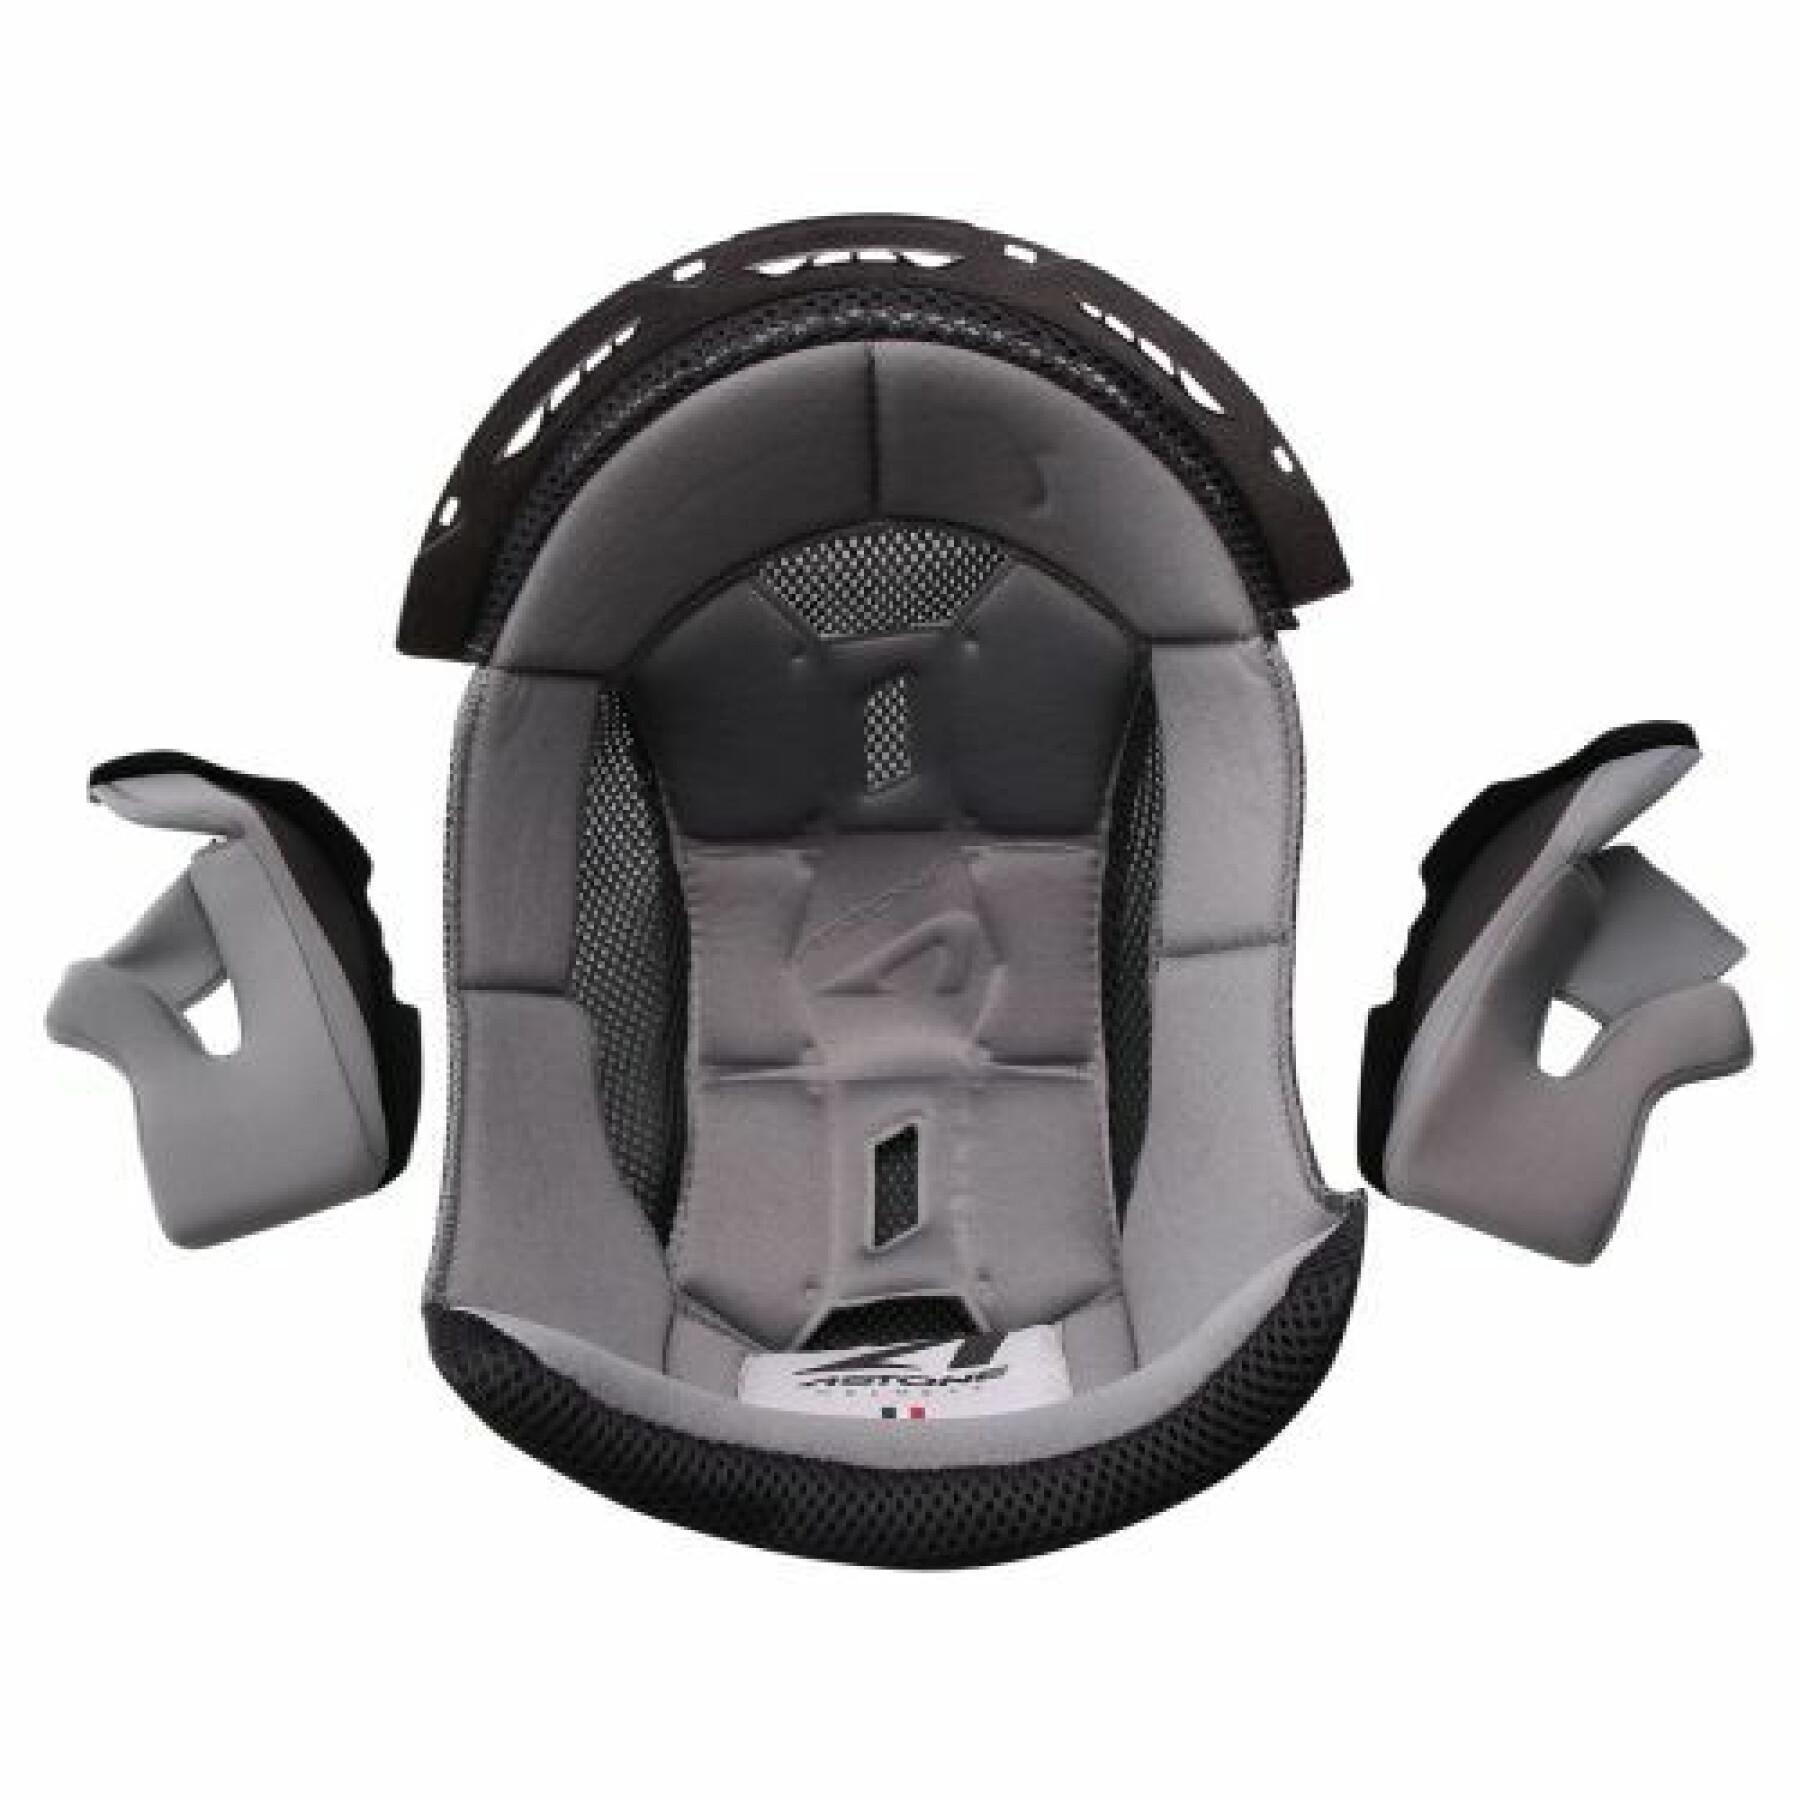 Foam motorcycle helmet interior Astone Gt900